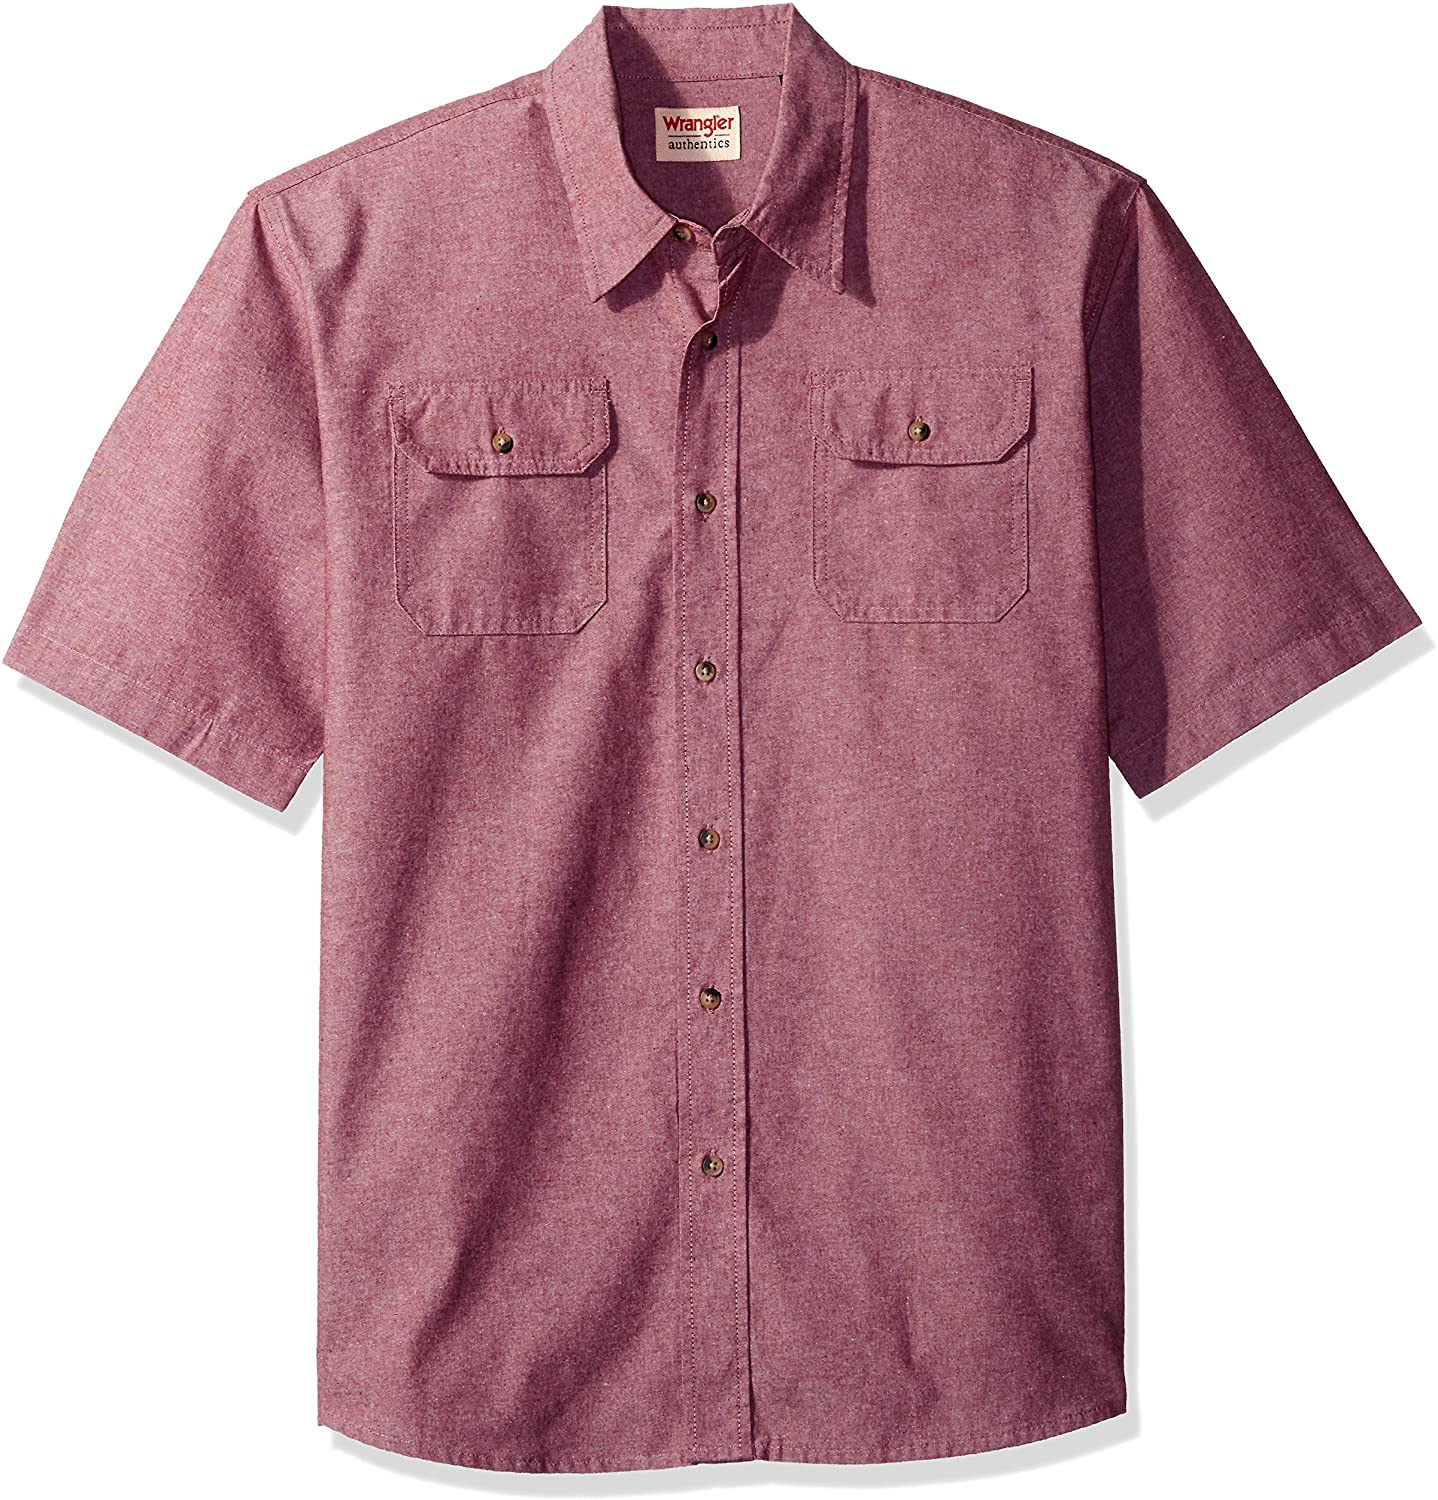 Wrangler Authentics Men's Short Sleeve Classic Woven Shirt, Dark